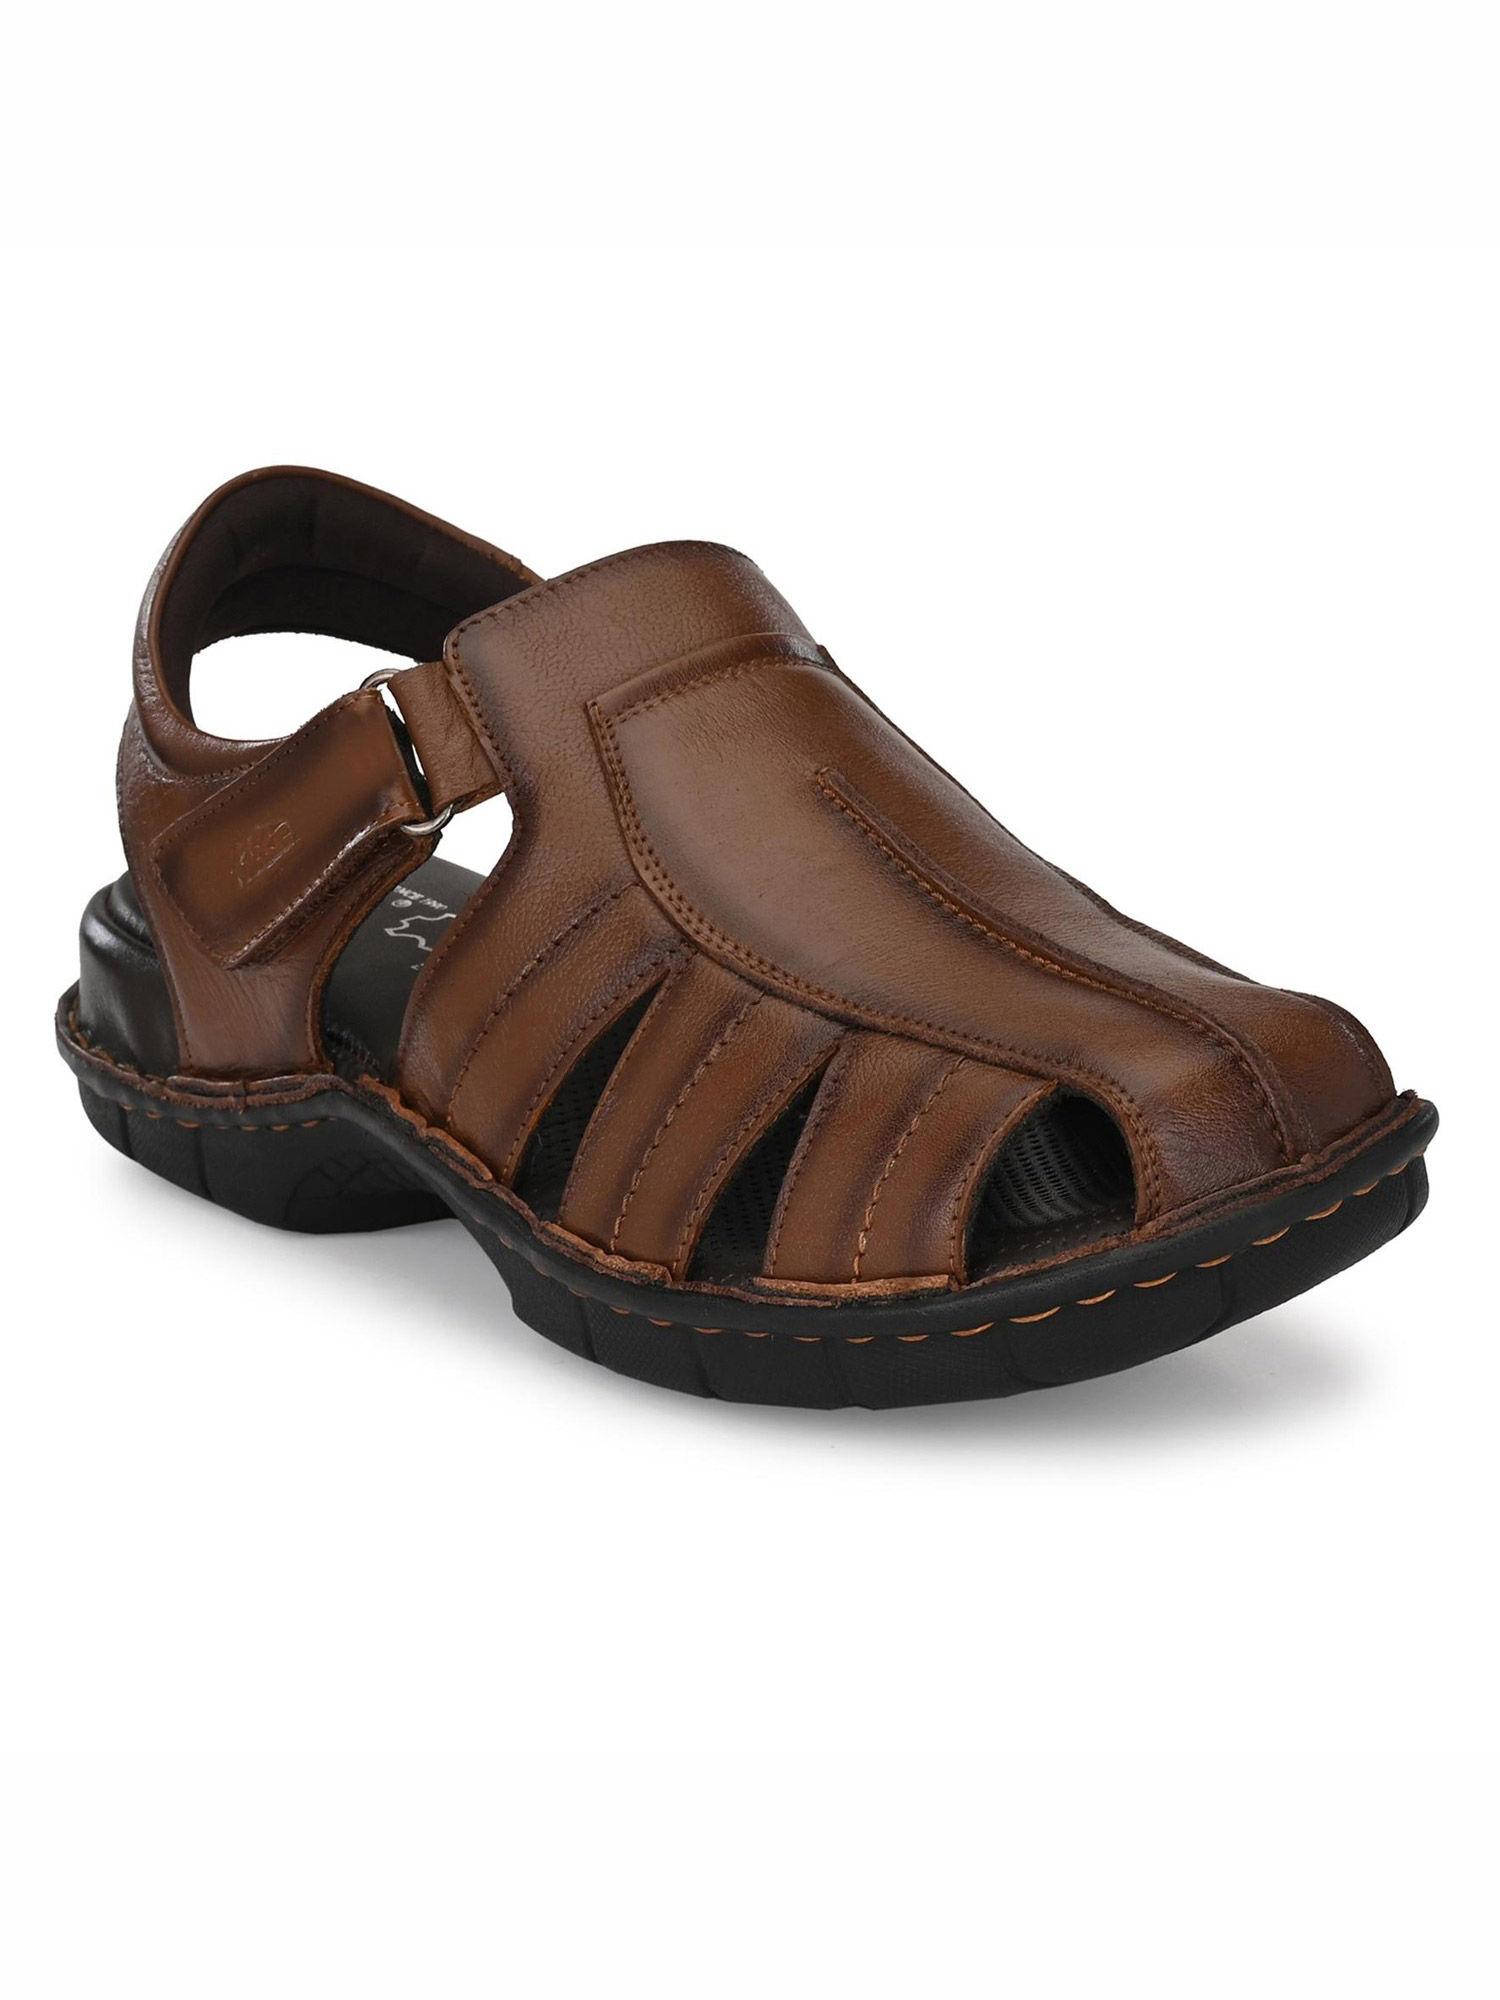 men's tan leather comfort sandals with velcro closure